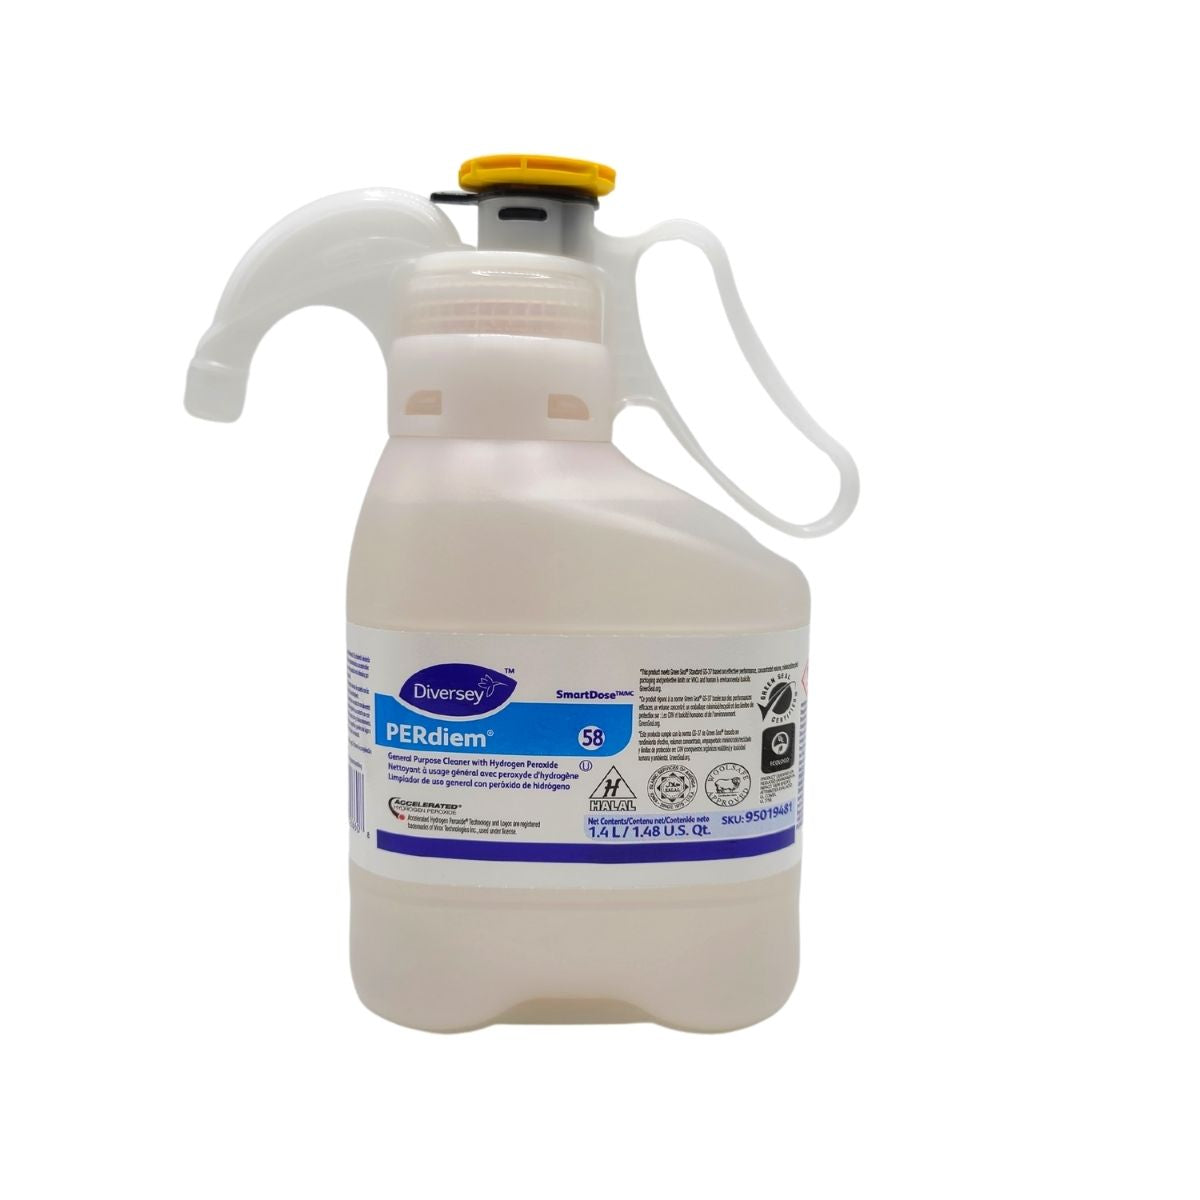 PERdiem 58 Multipurpose Cleaner for Diversey SmartDose, 1.4 L / 1.48 U.S. Qt.